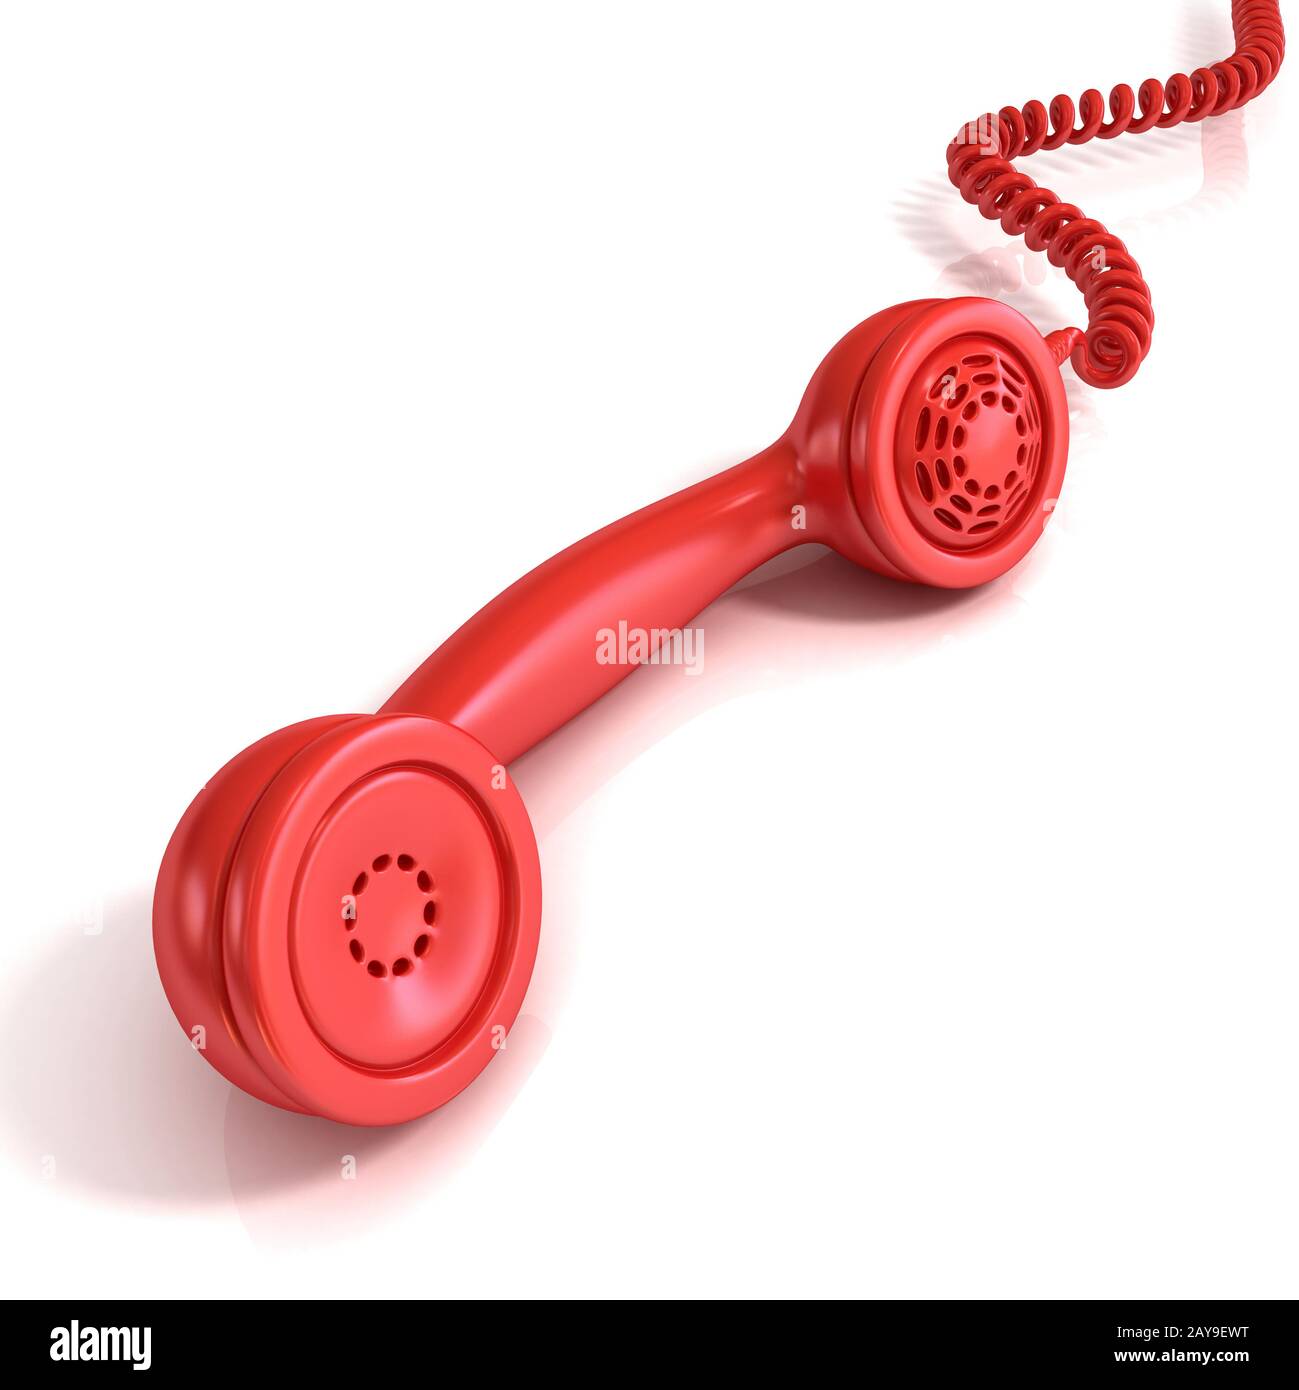 Red telephone handset, retro illustration Stock Photo